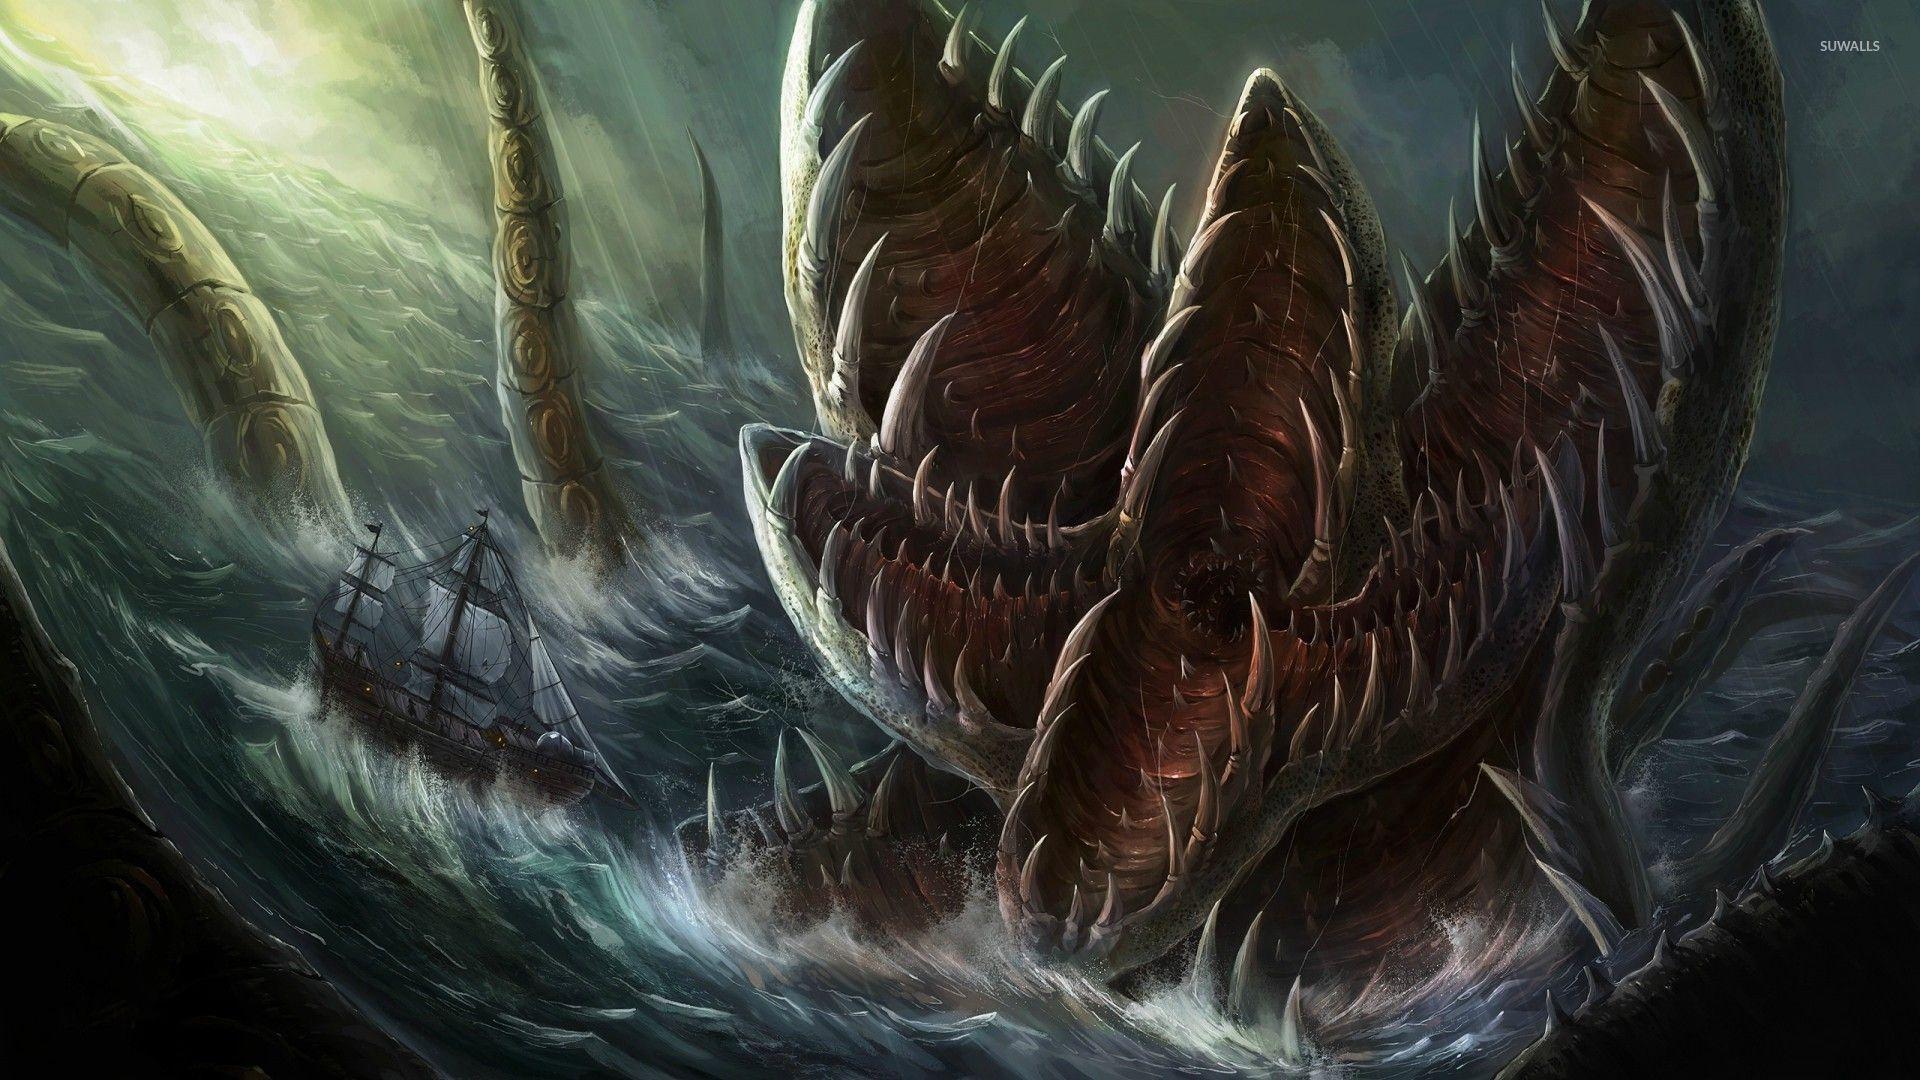 Sea monster attacking the sailing ship wallpapers.